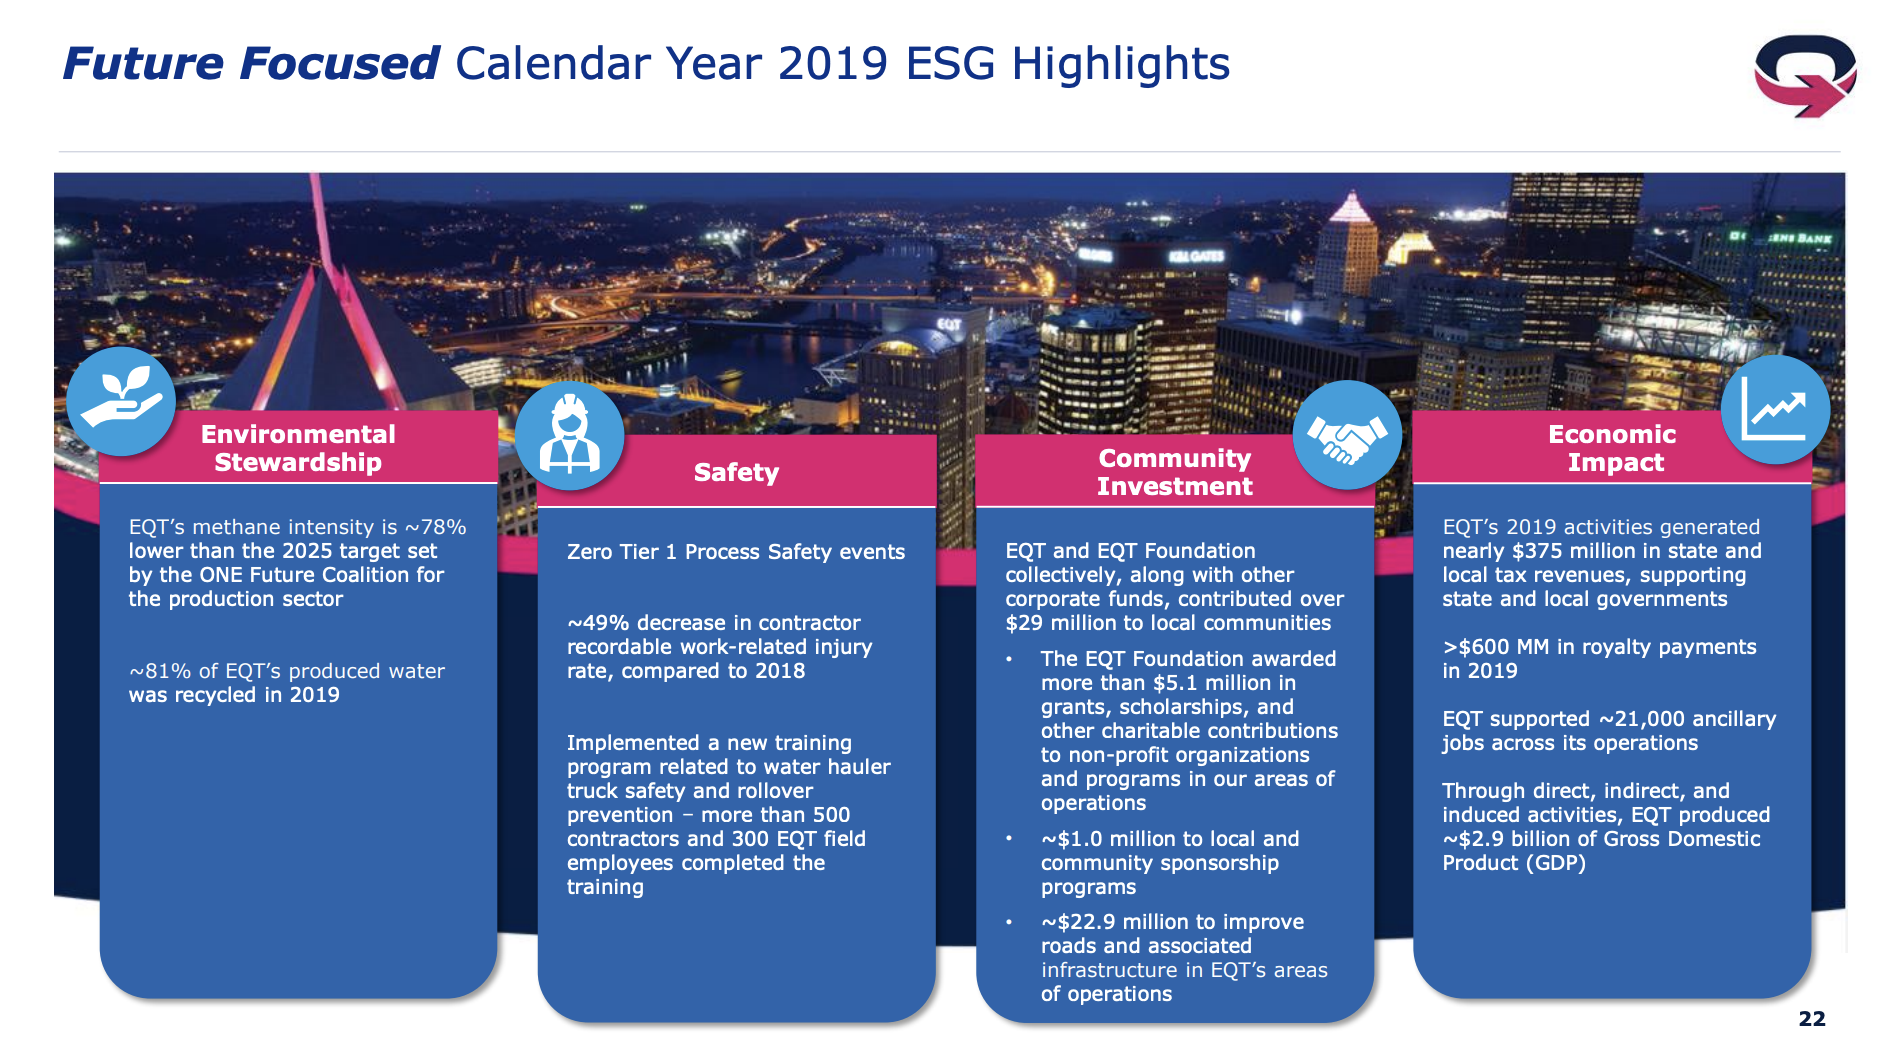 2019 ESG Highlights for EQT